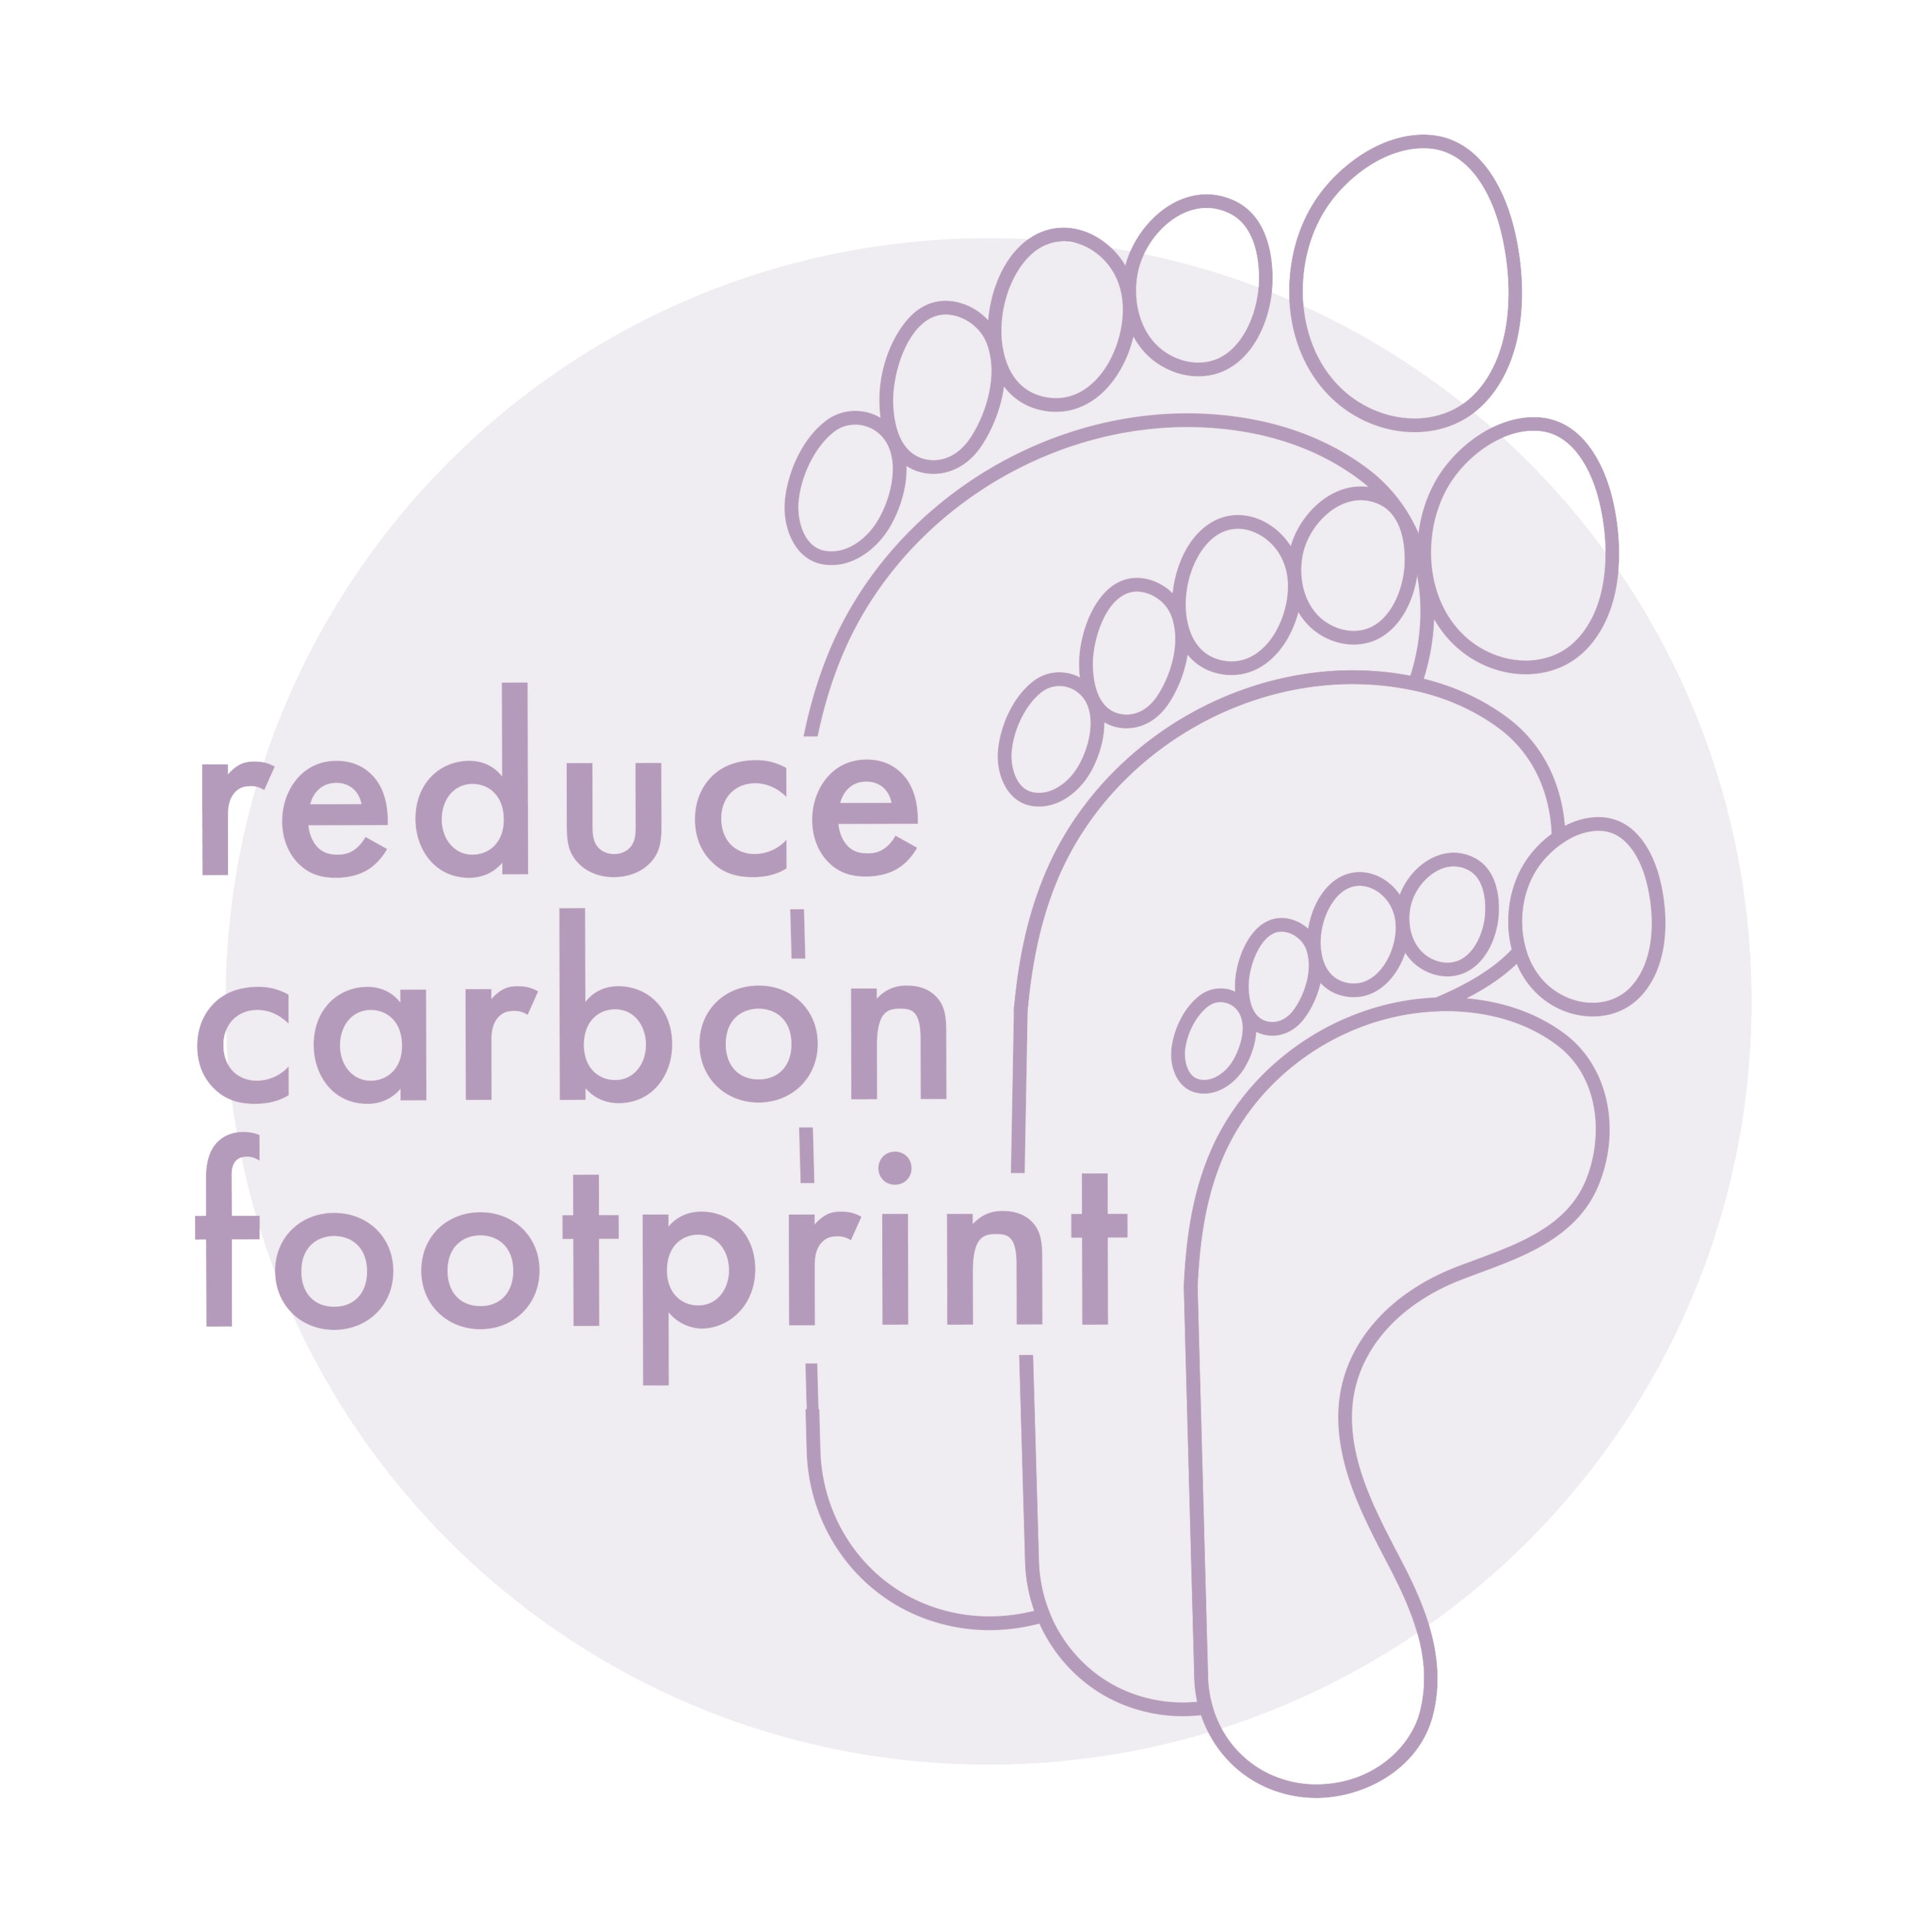 Reduce carbon